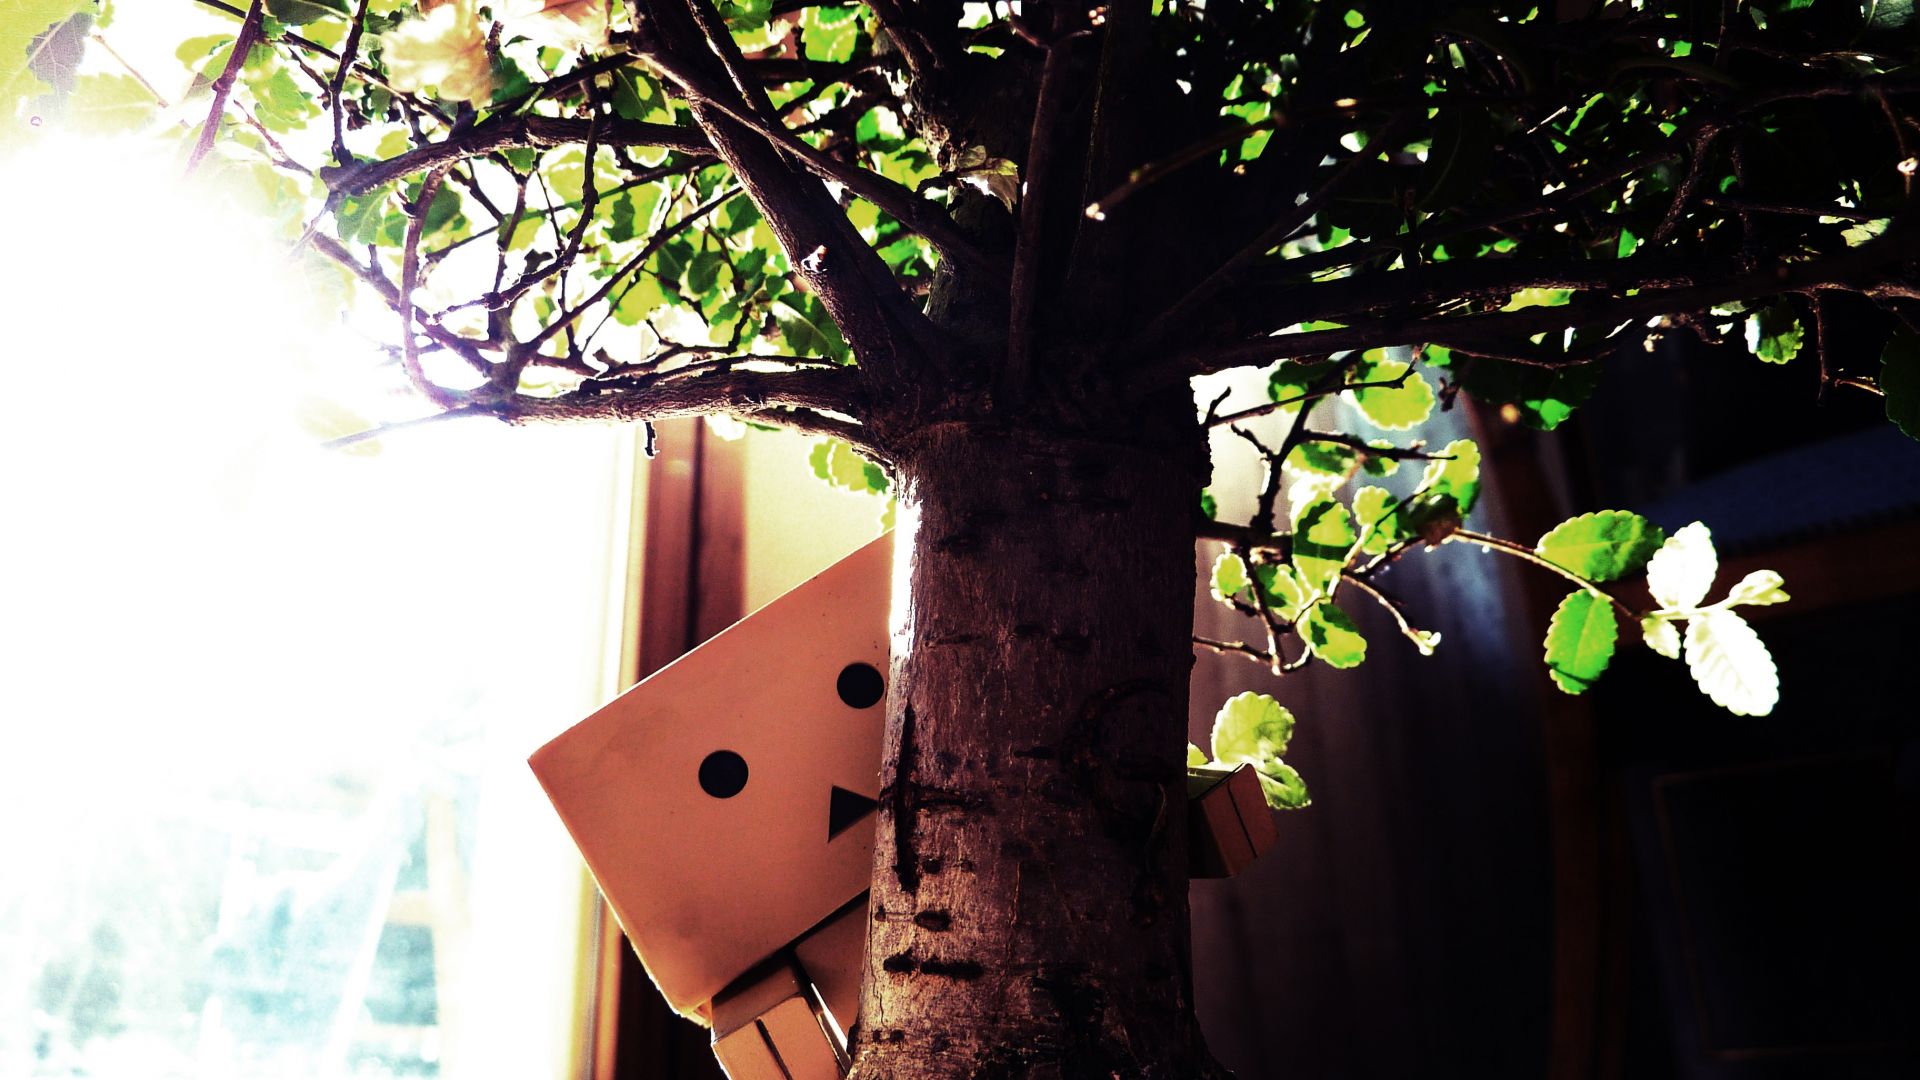 Wallpaper Danbo amazon paper box behind tree